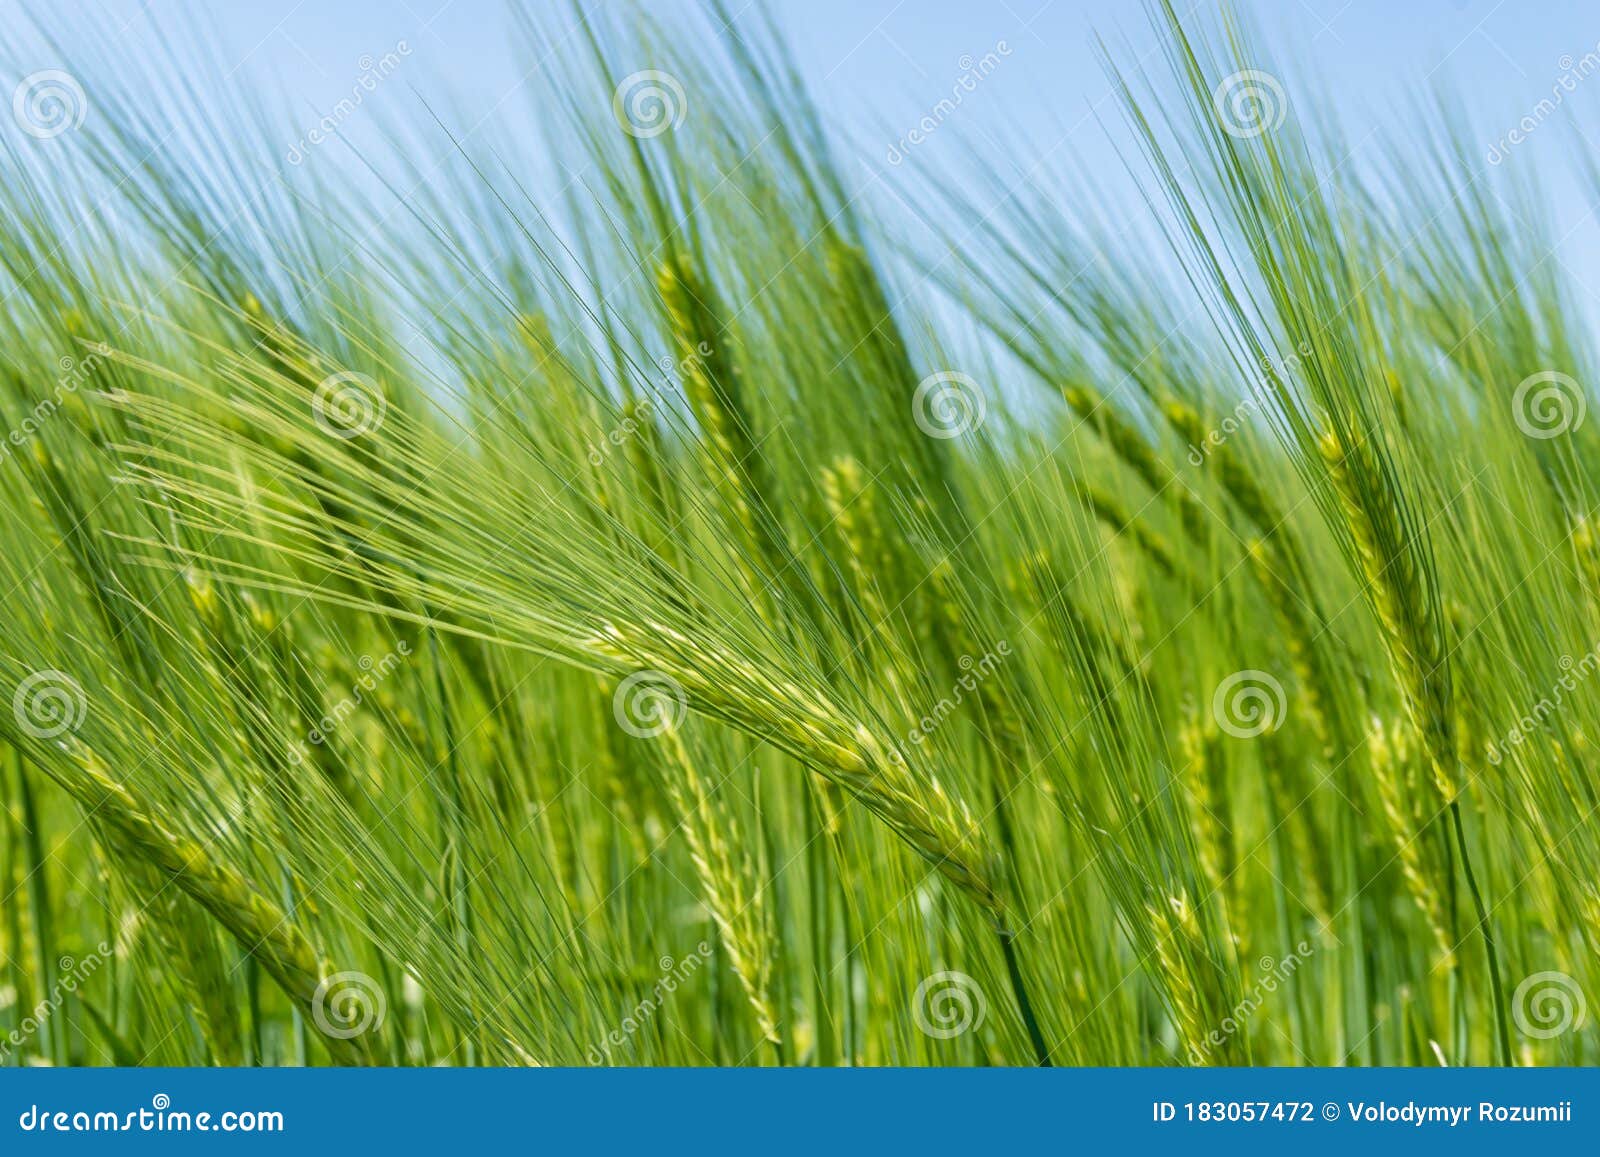 barley fields in spring under blue sky